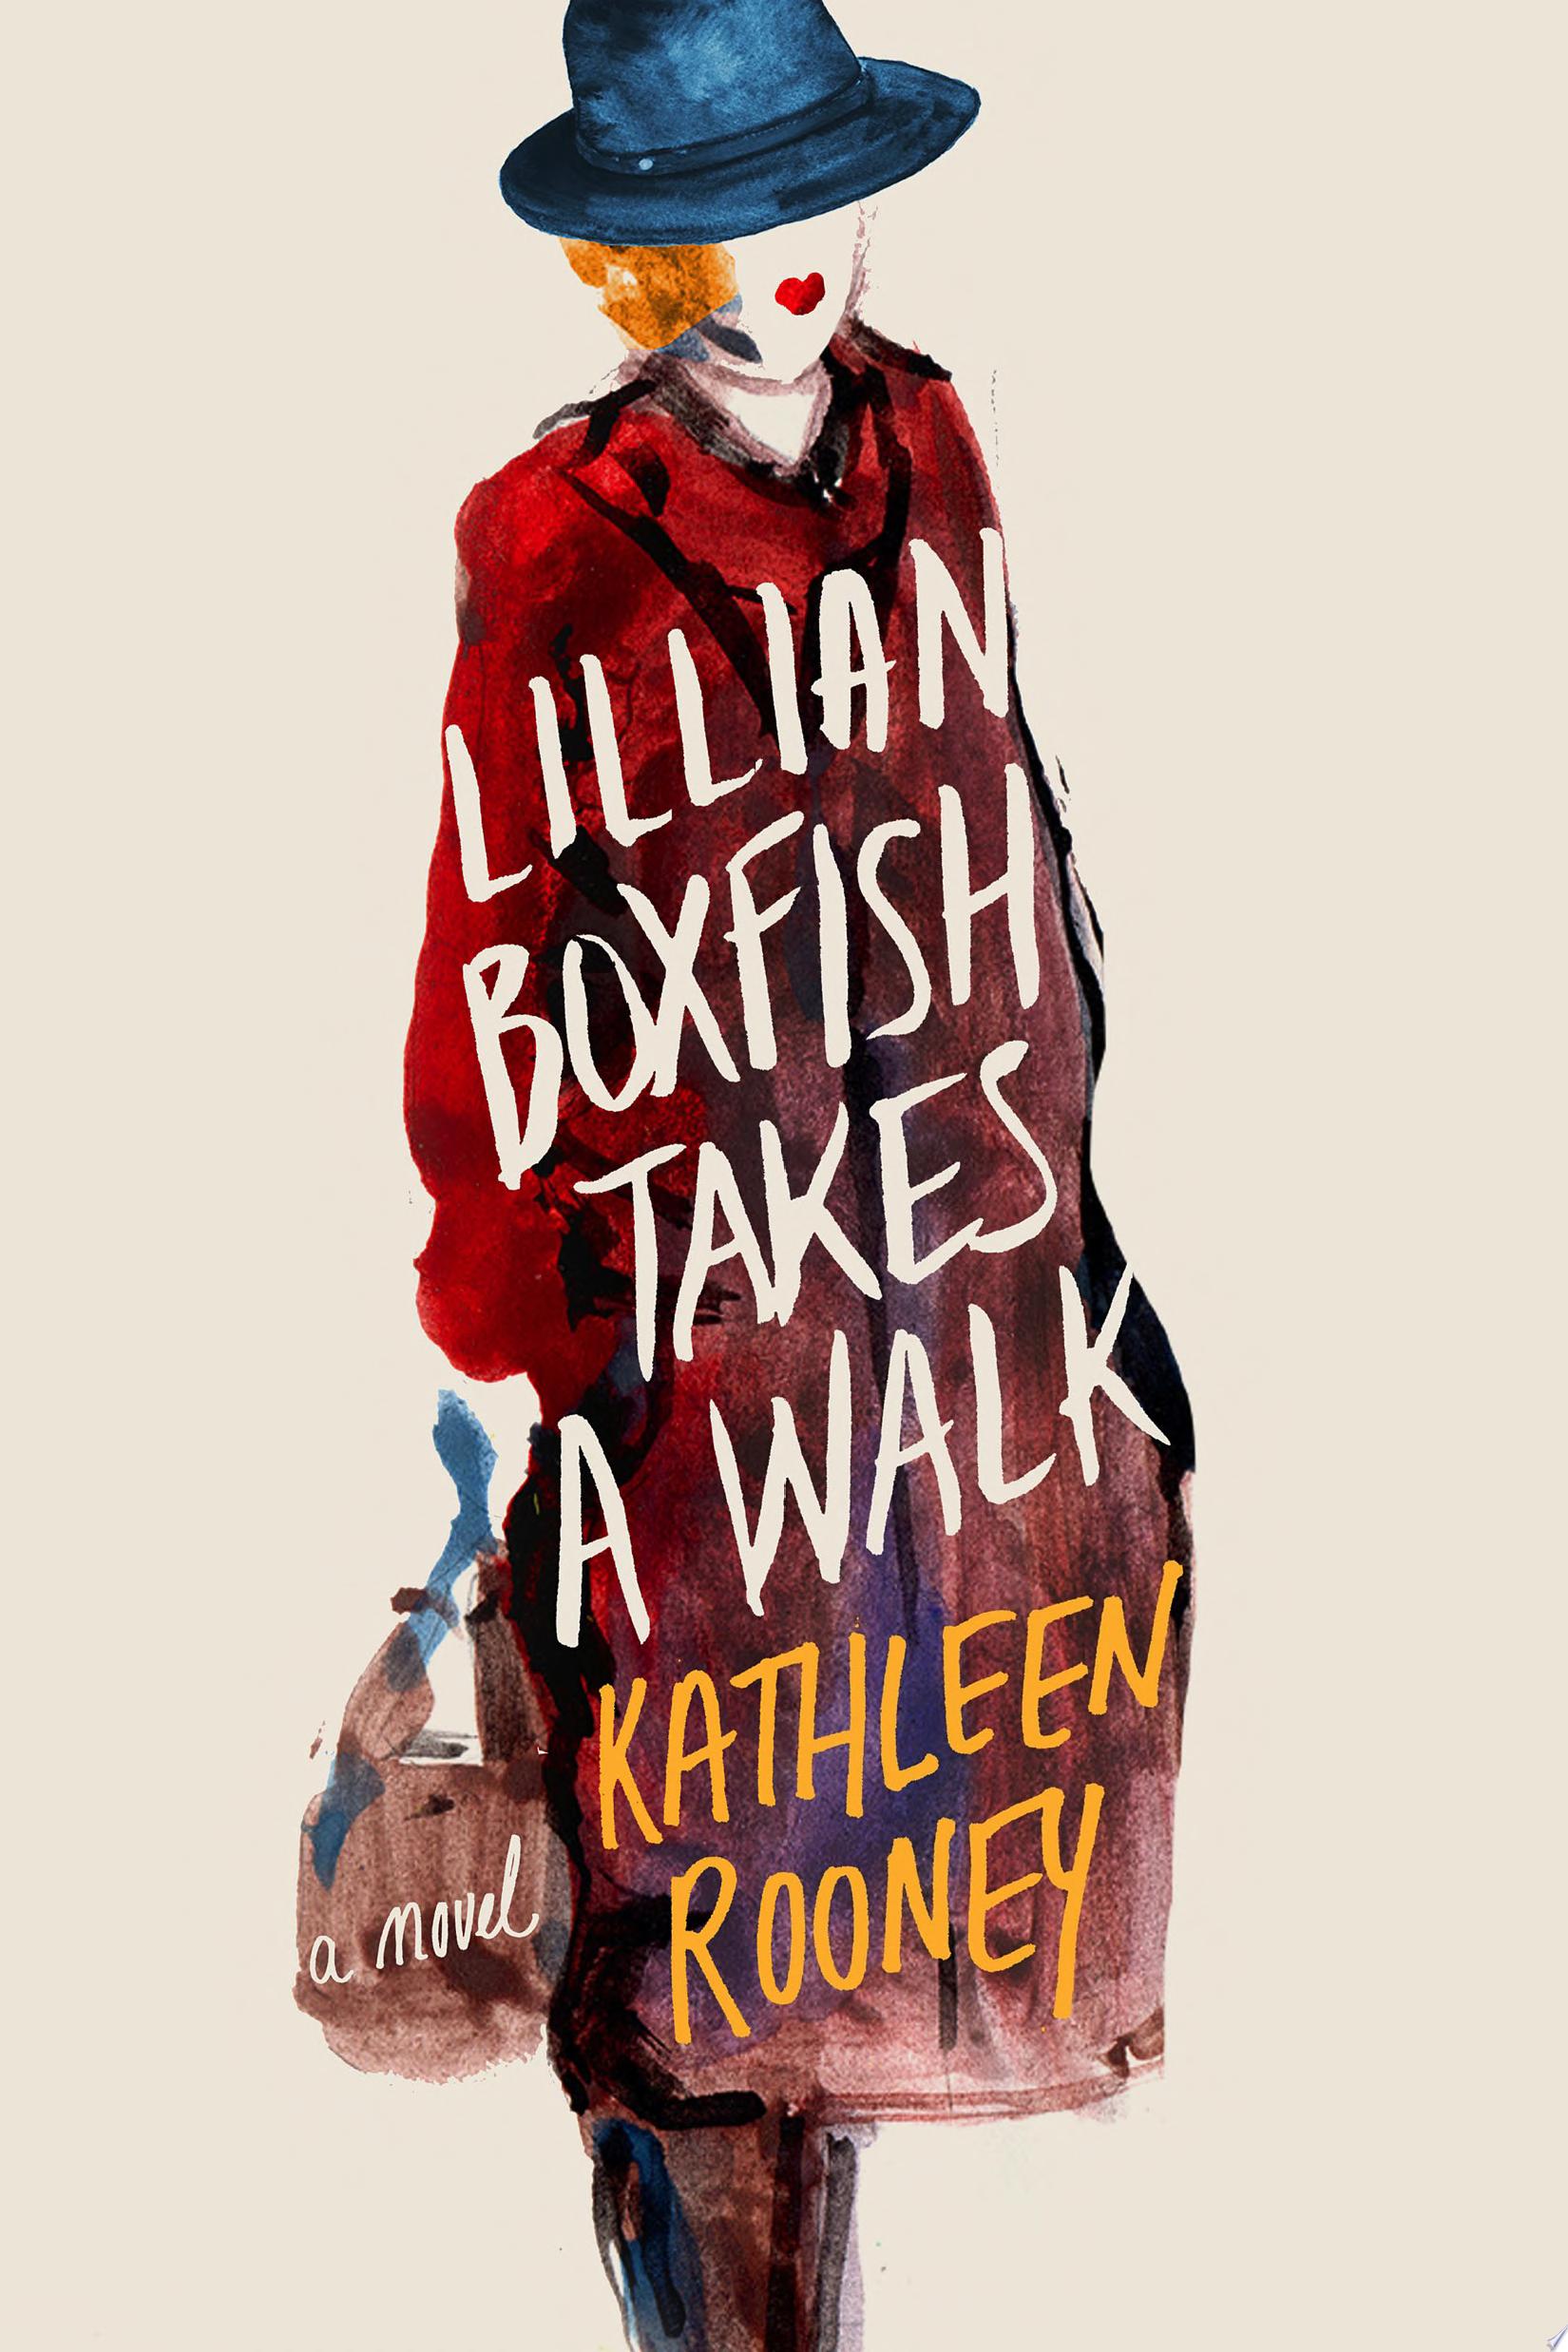 Image for "Lillian Boxfish Takes a Walk"